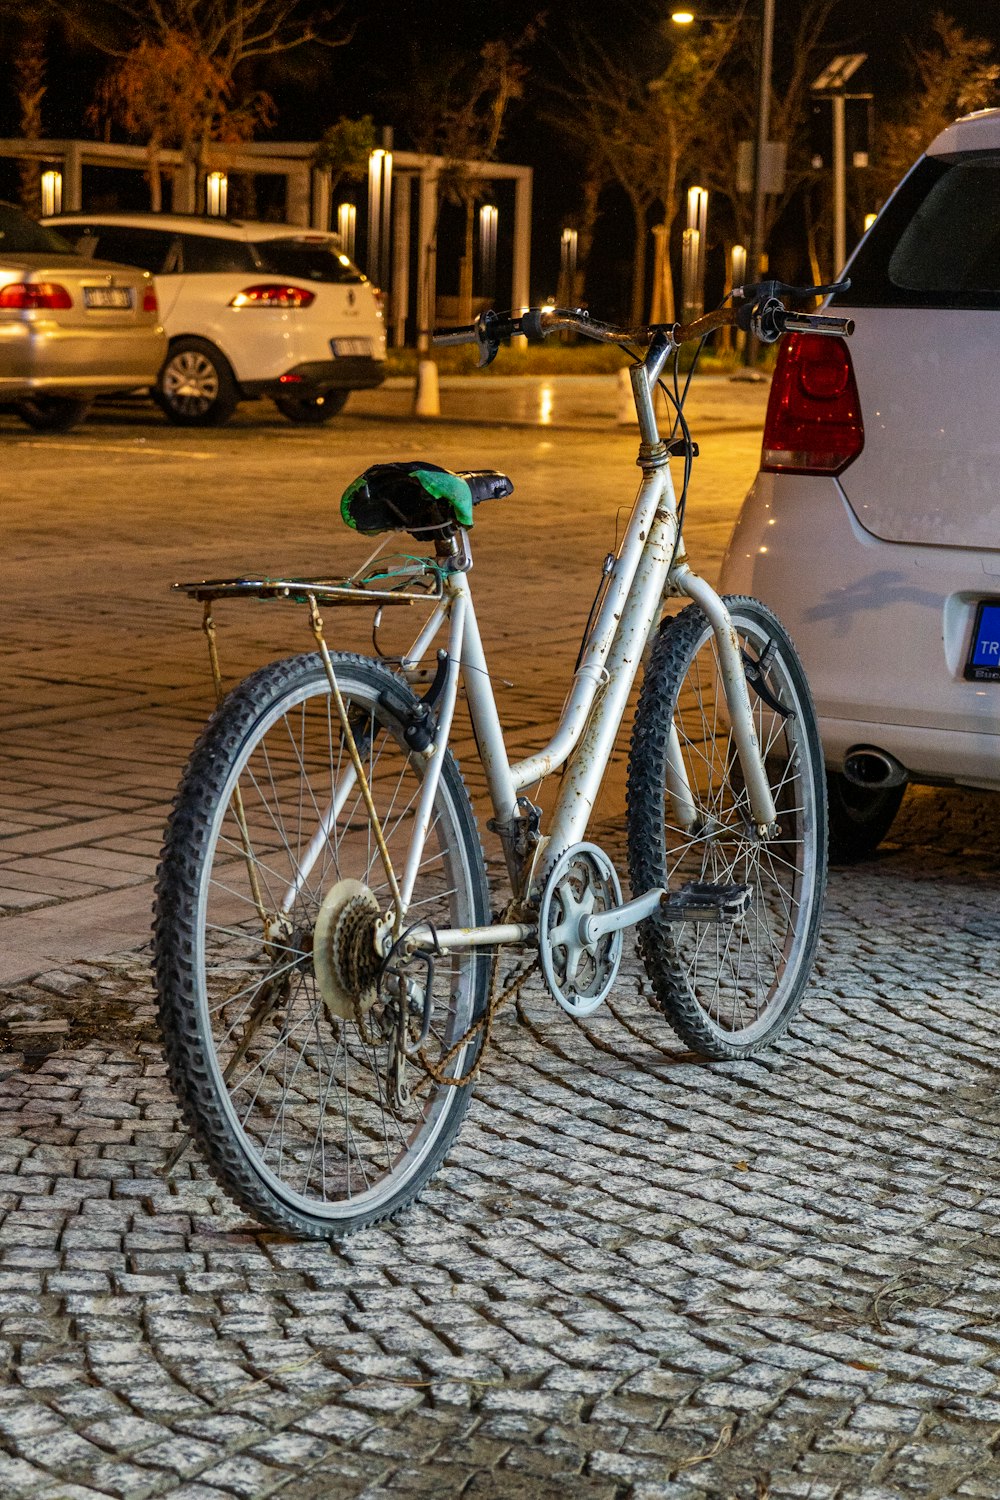 a bike parked on a cobblestone street next to a white car